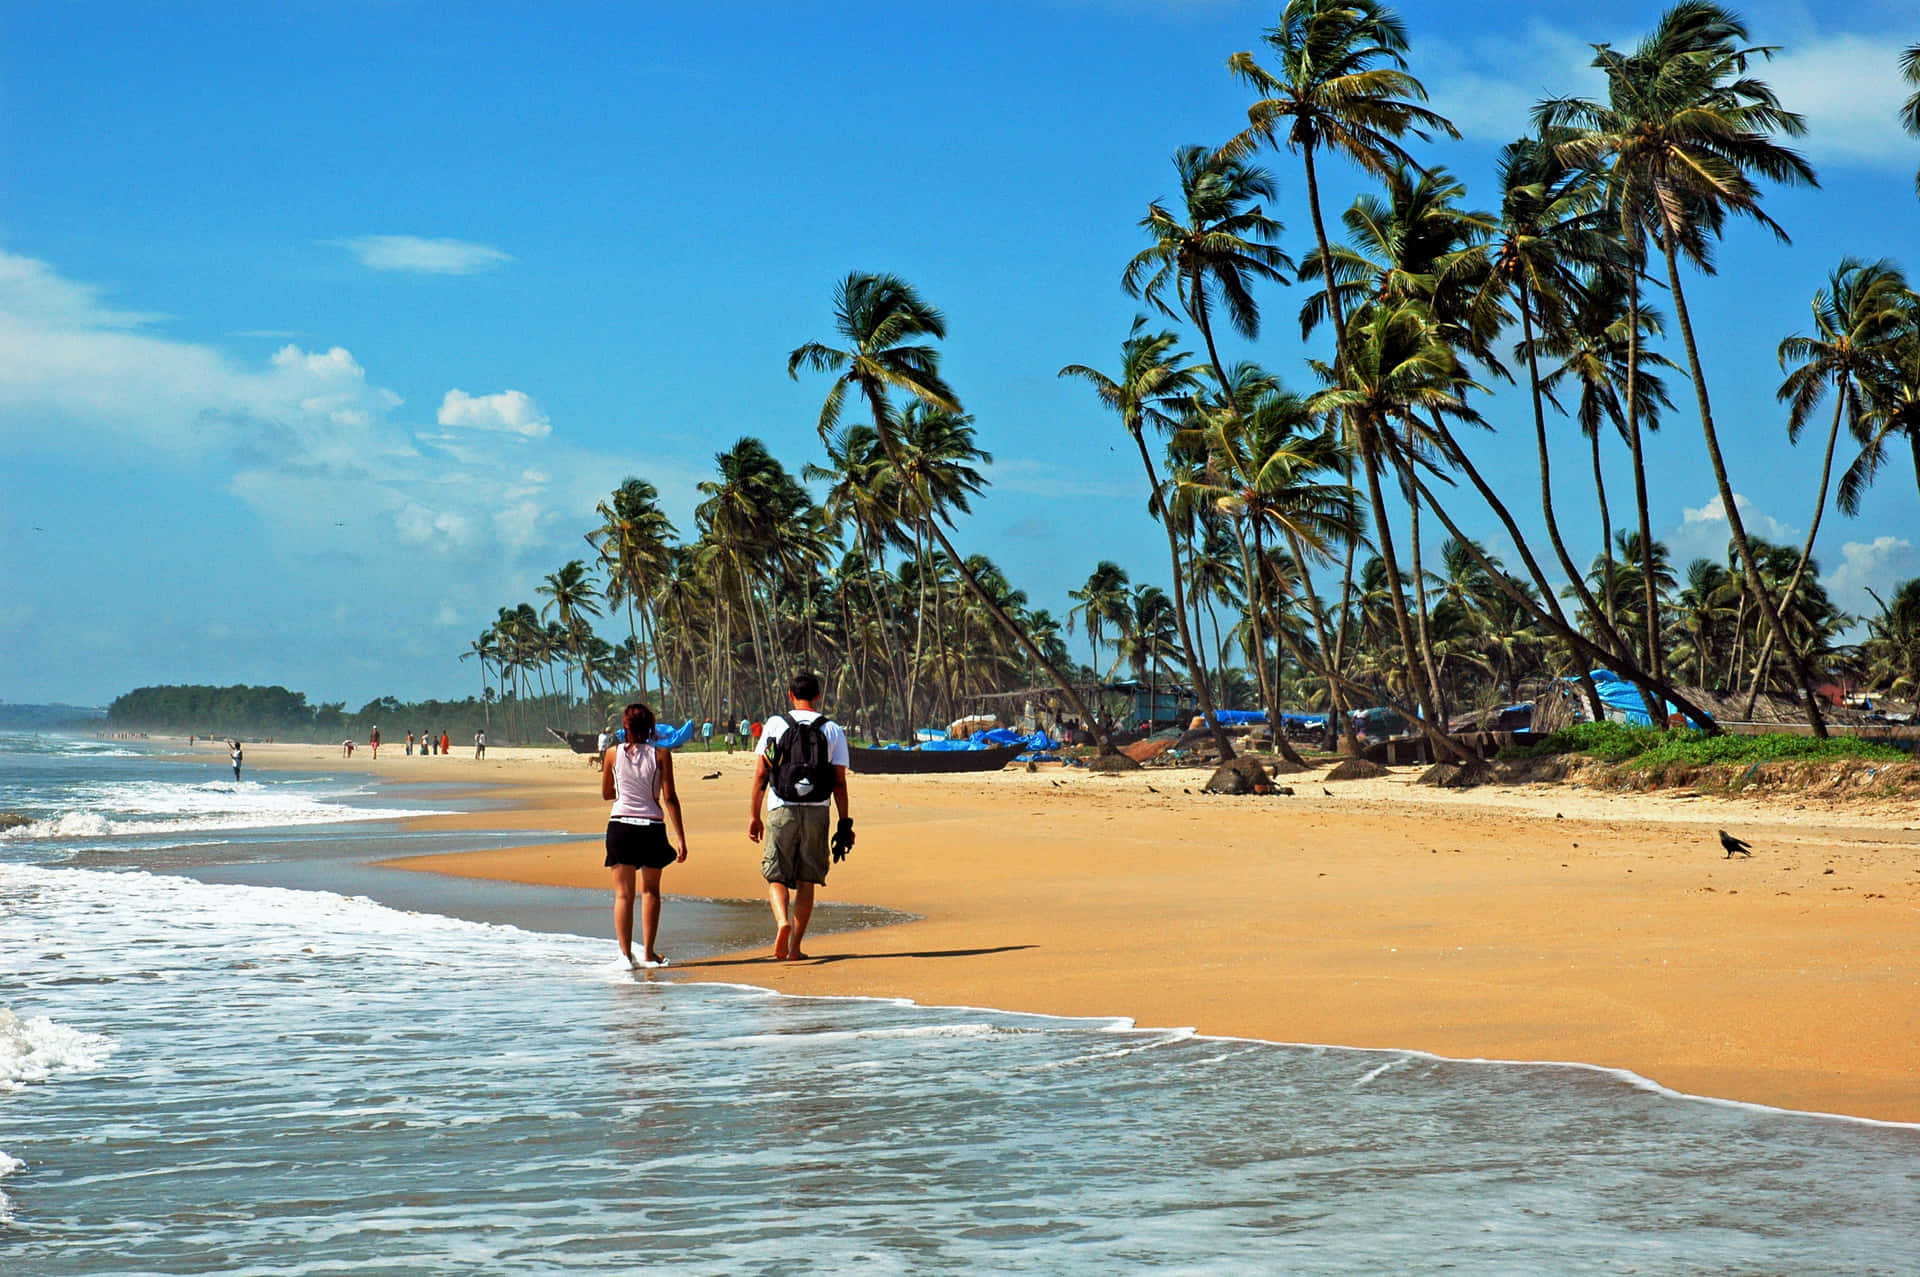 Enjoy the sun, sand, and sea in Goa, India